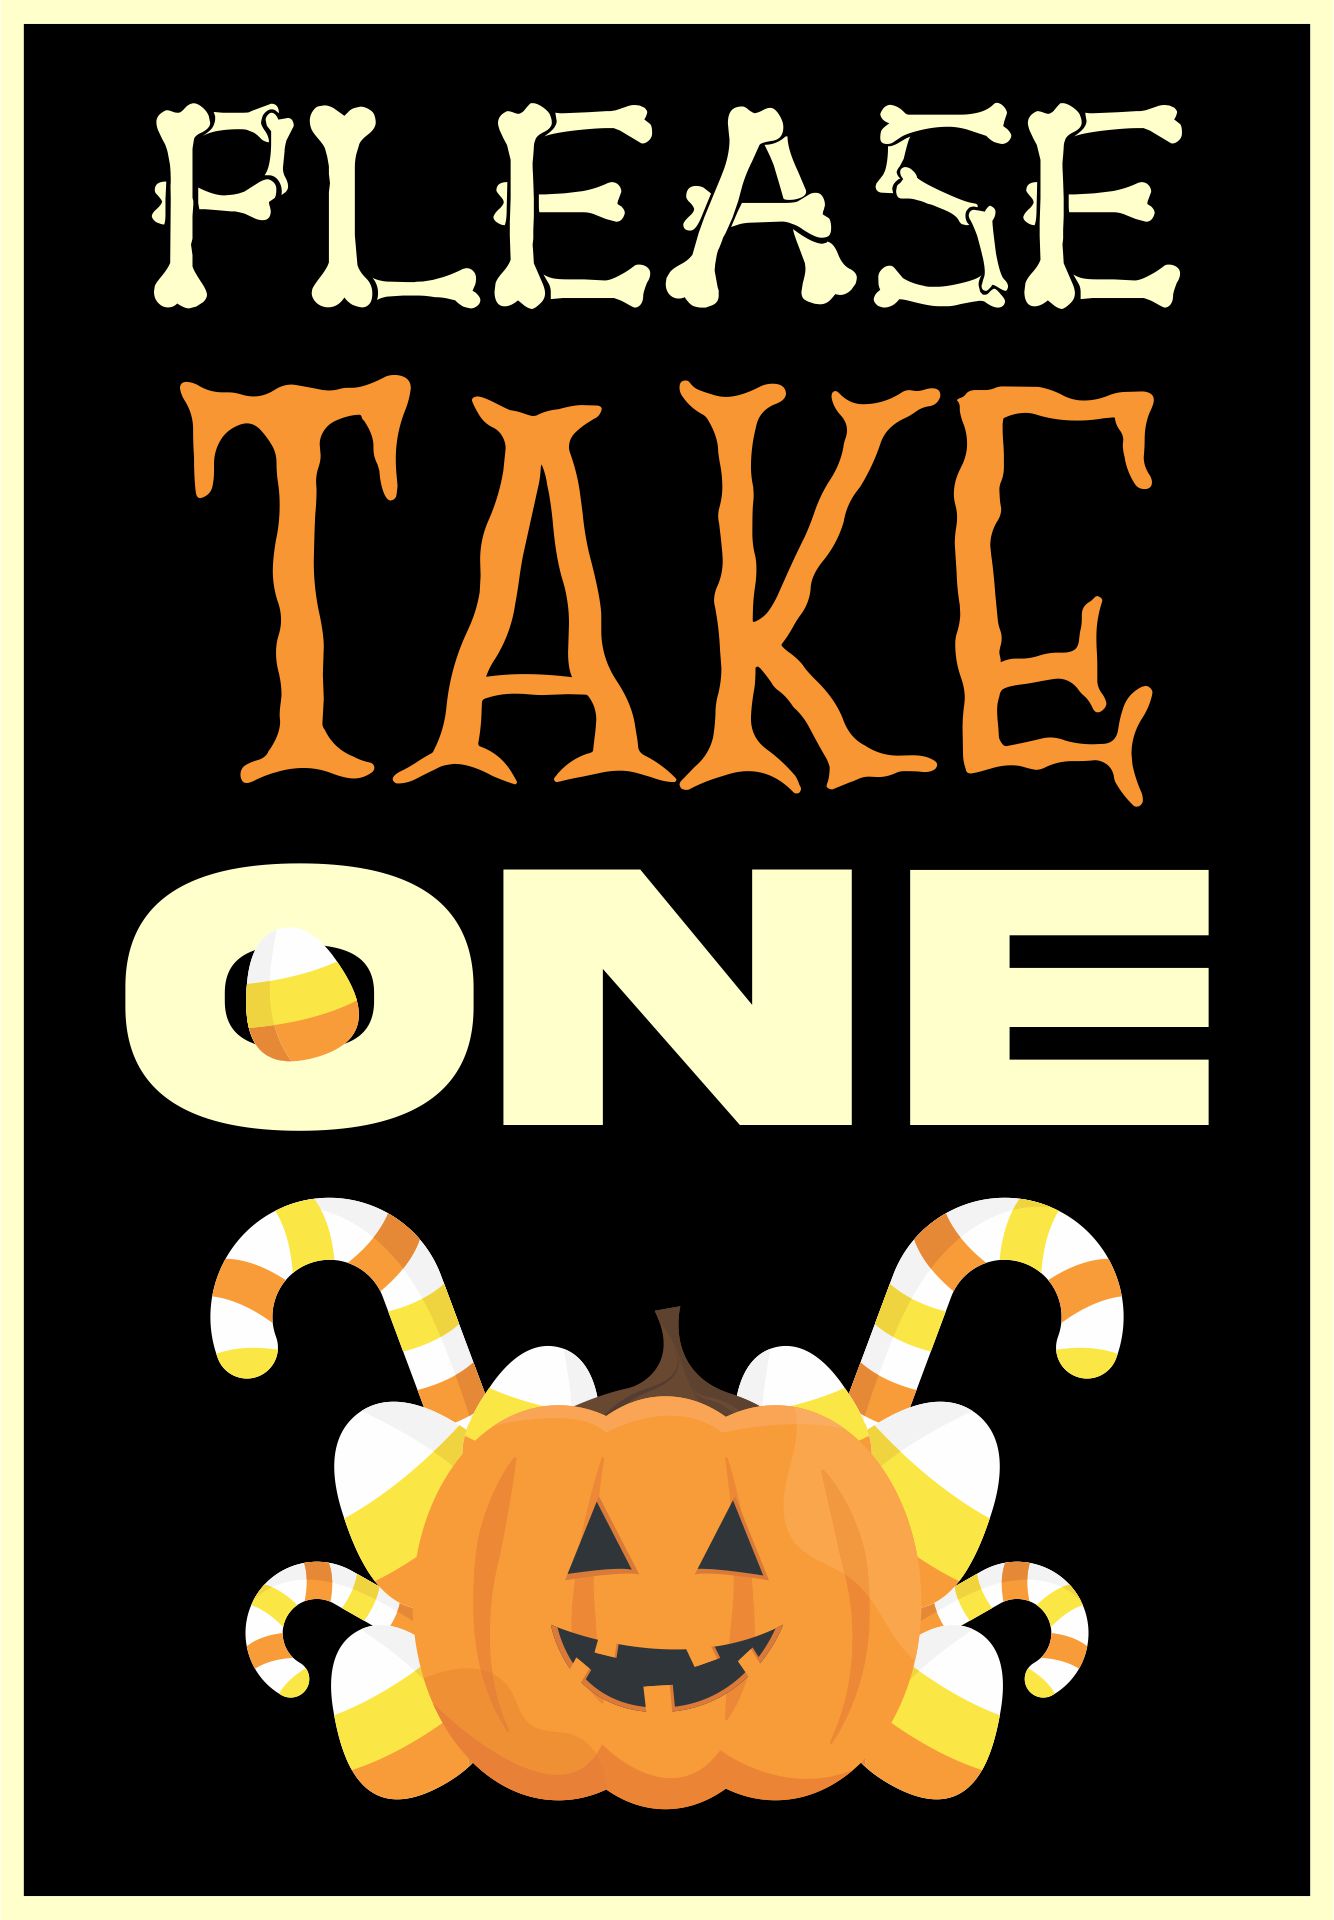 Please Take One Halloween Sign